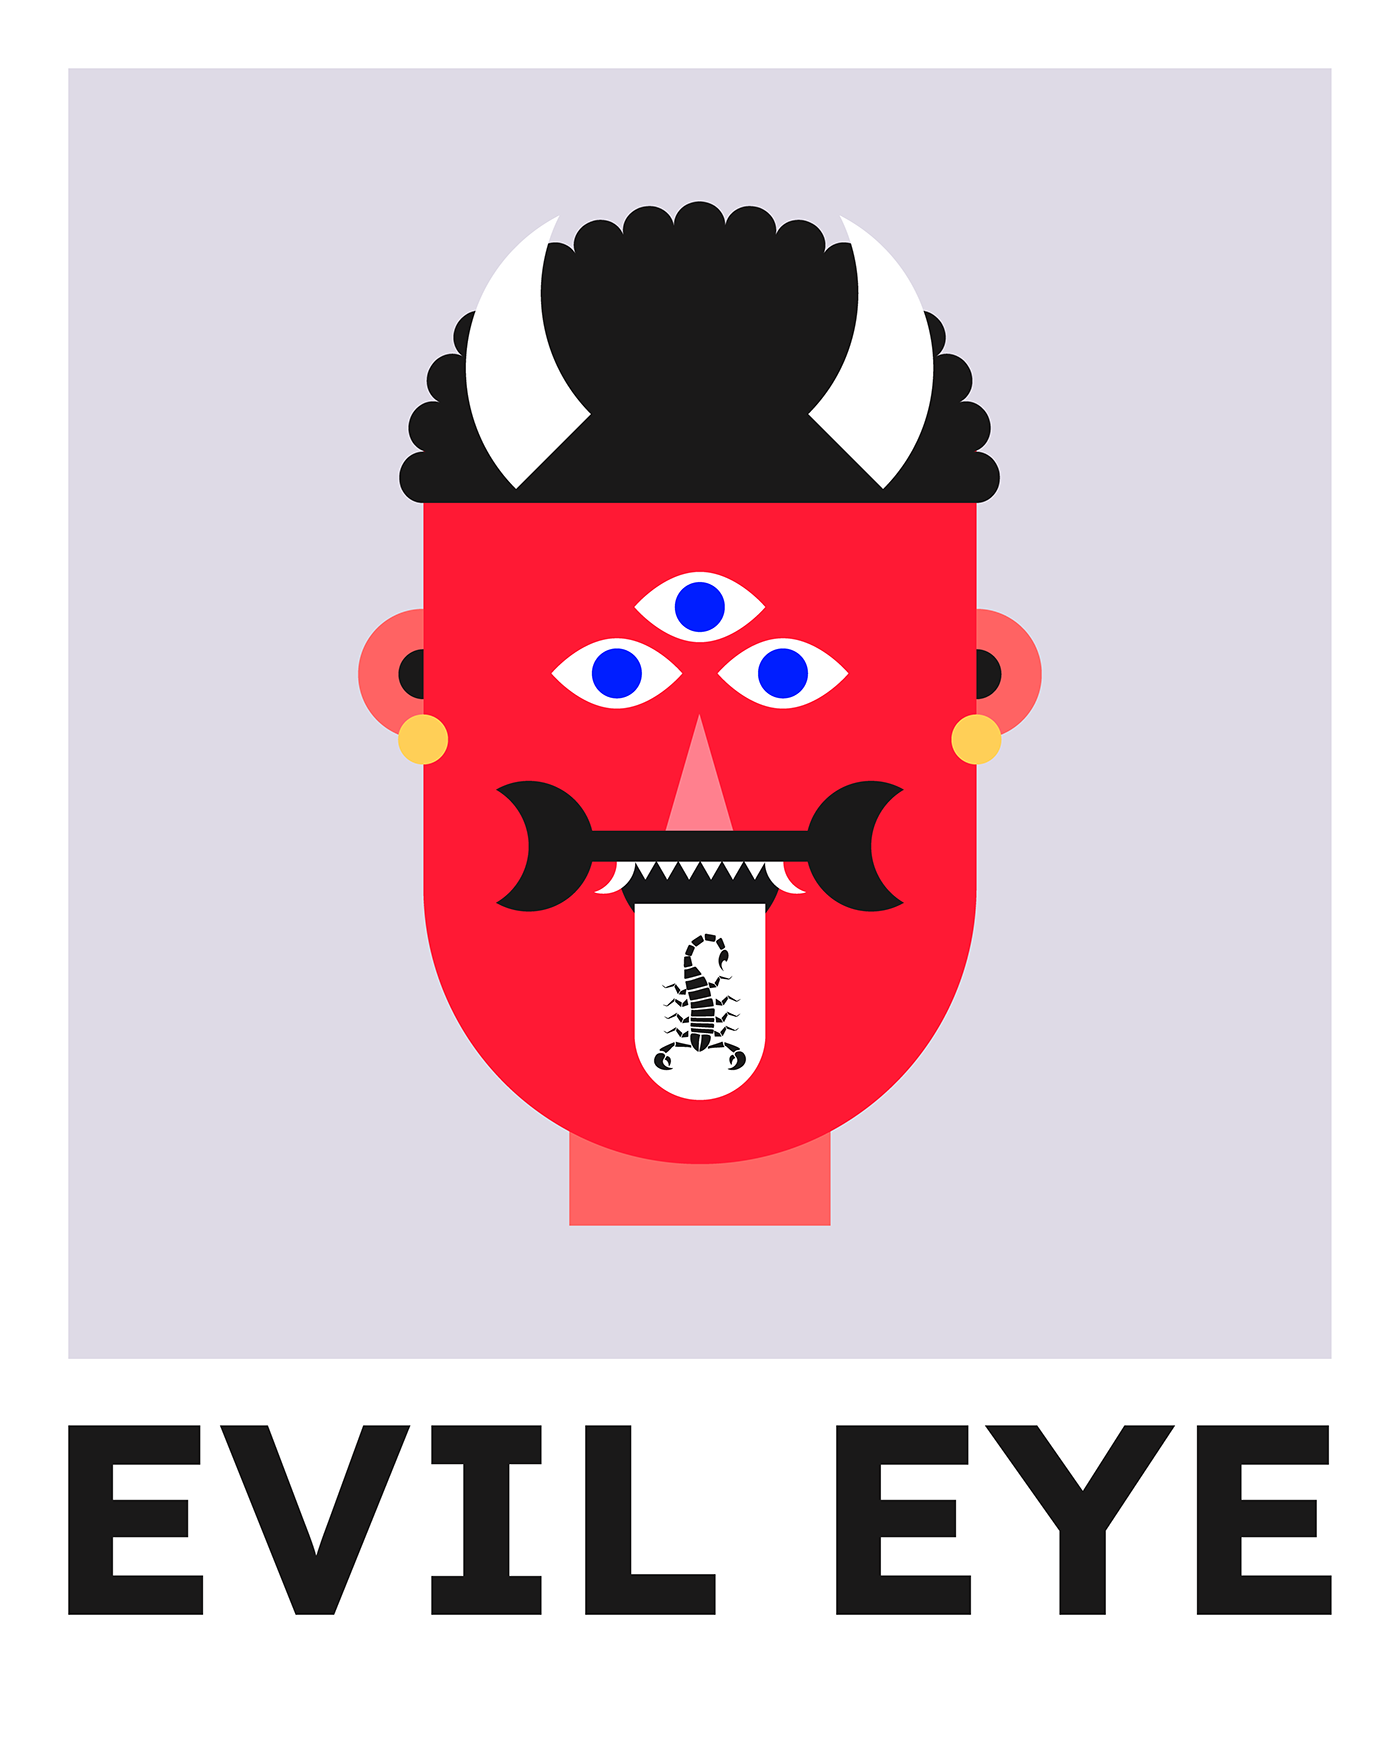 evileye evil demon poster illsutration digital illustration adobe illustrator Poster Design artwork